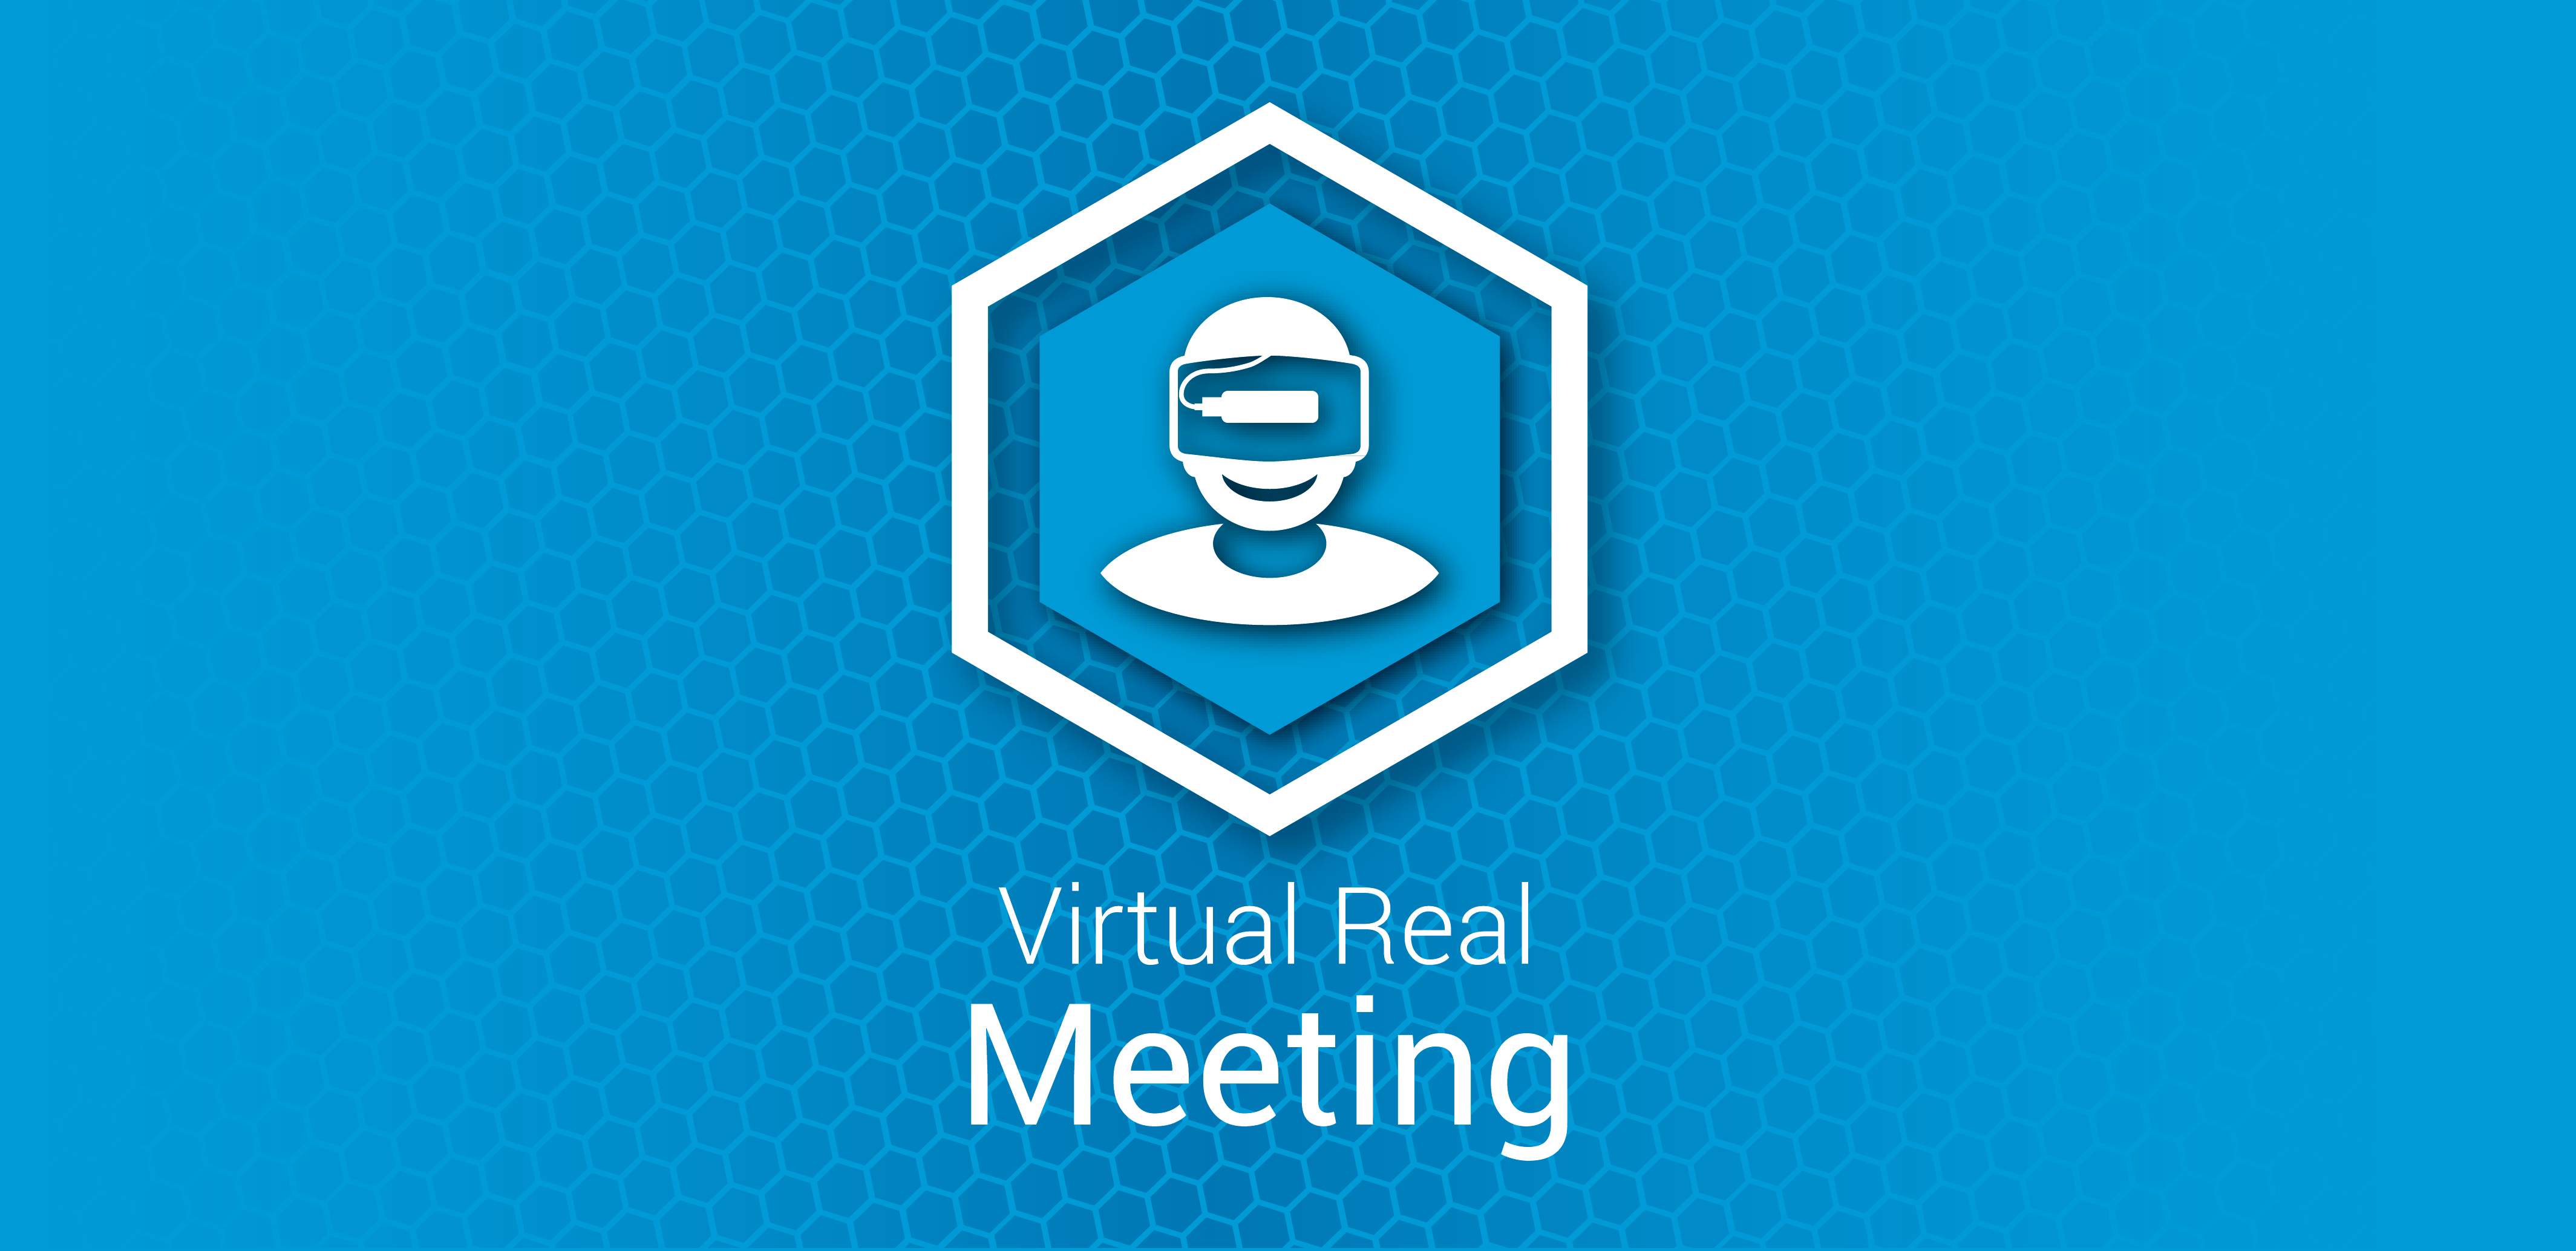 Virtual Real Meeting